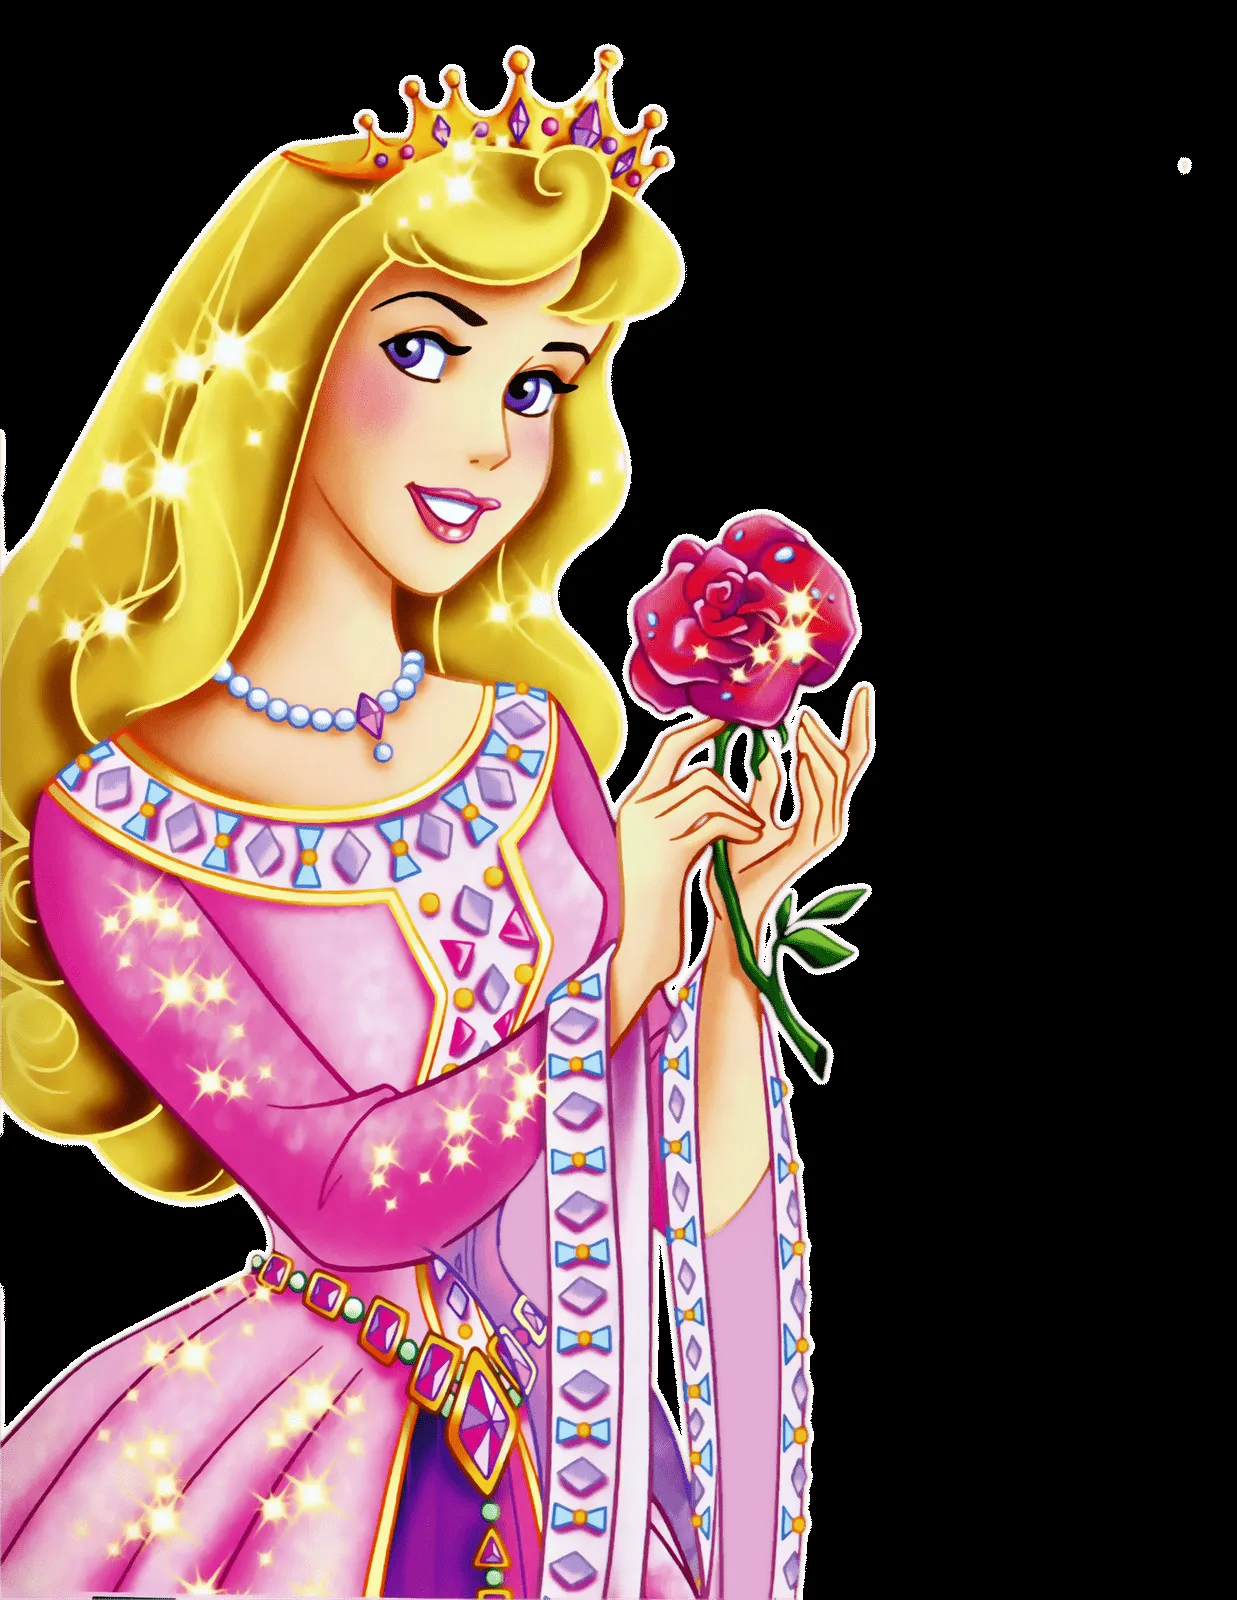 Imagenes de la princesa aurora Disney - Imagui